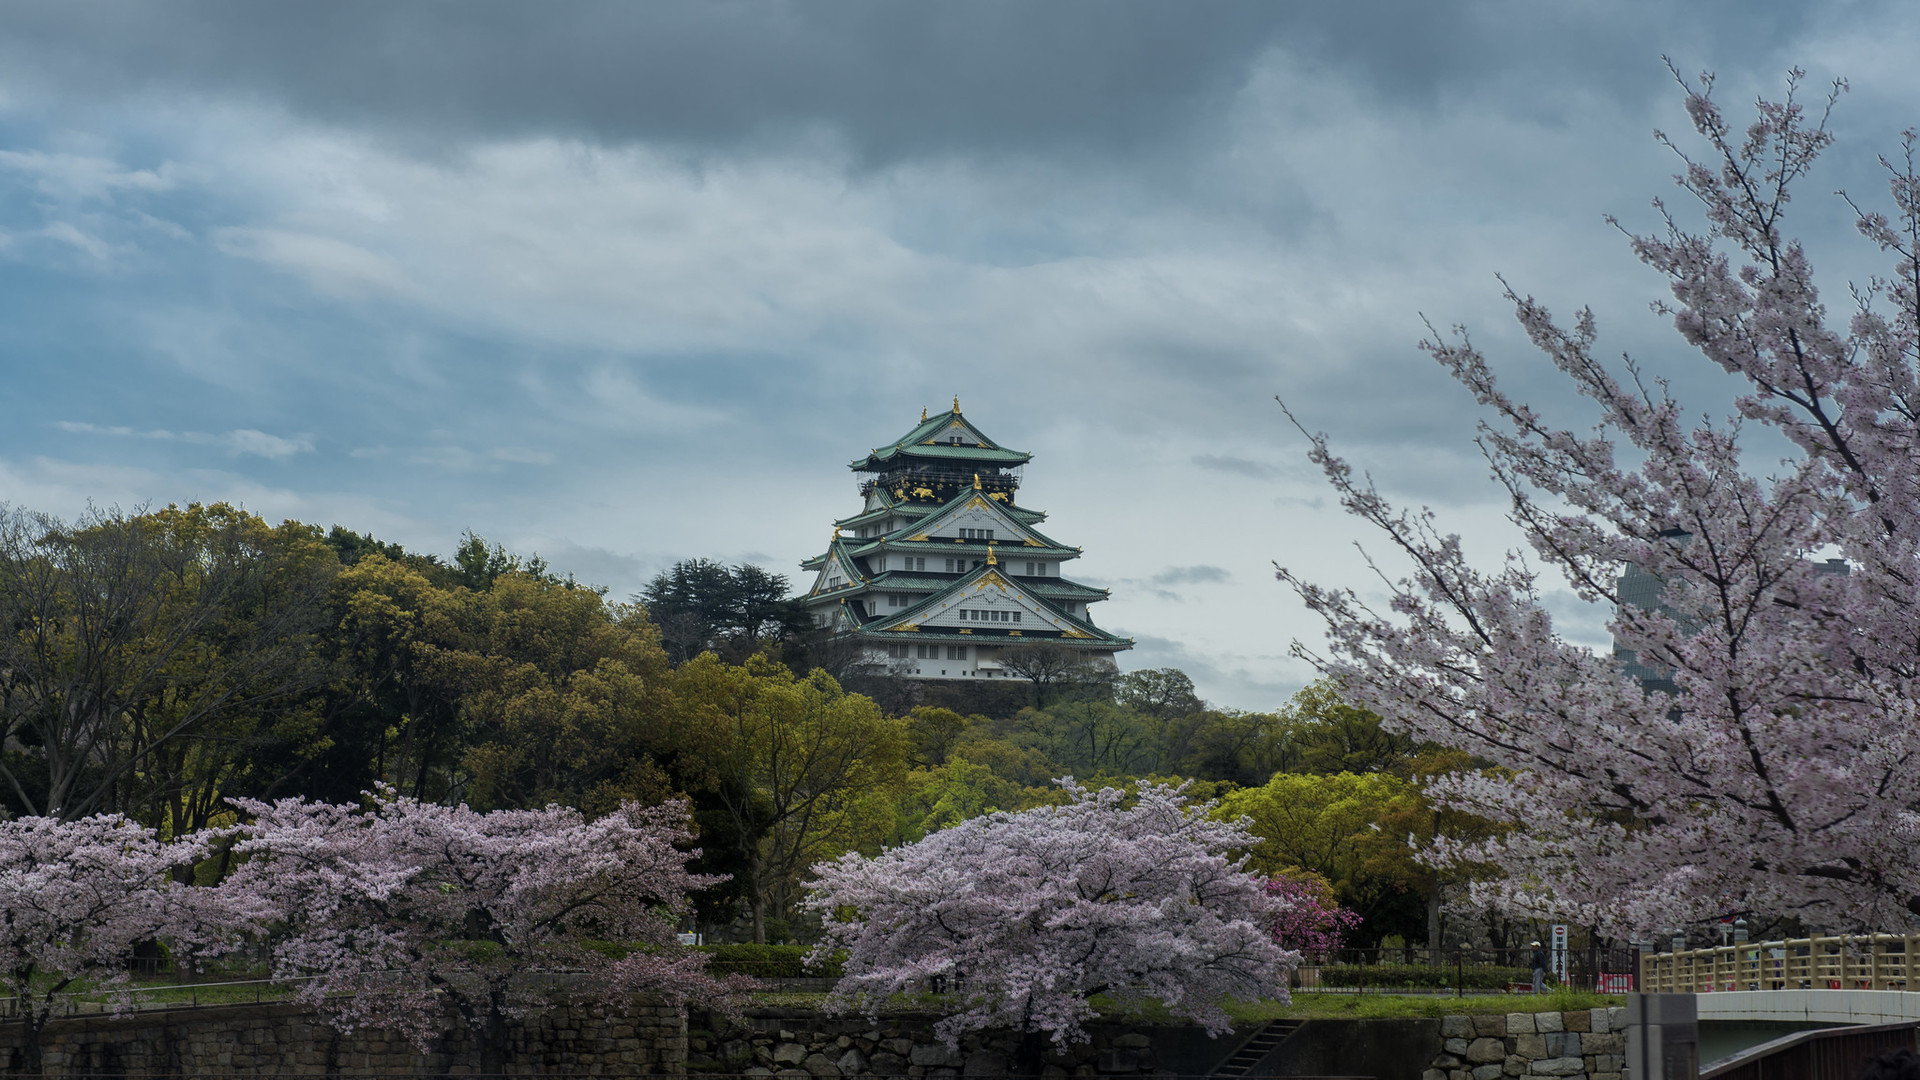 General 1920x1080 landscape nature sky trees Osaka Castle Japan cherry blossom Osaka